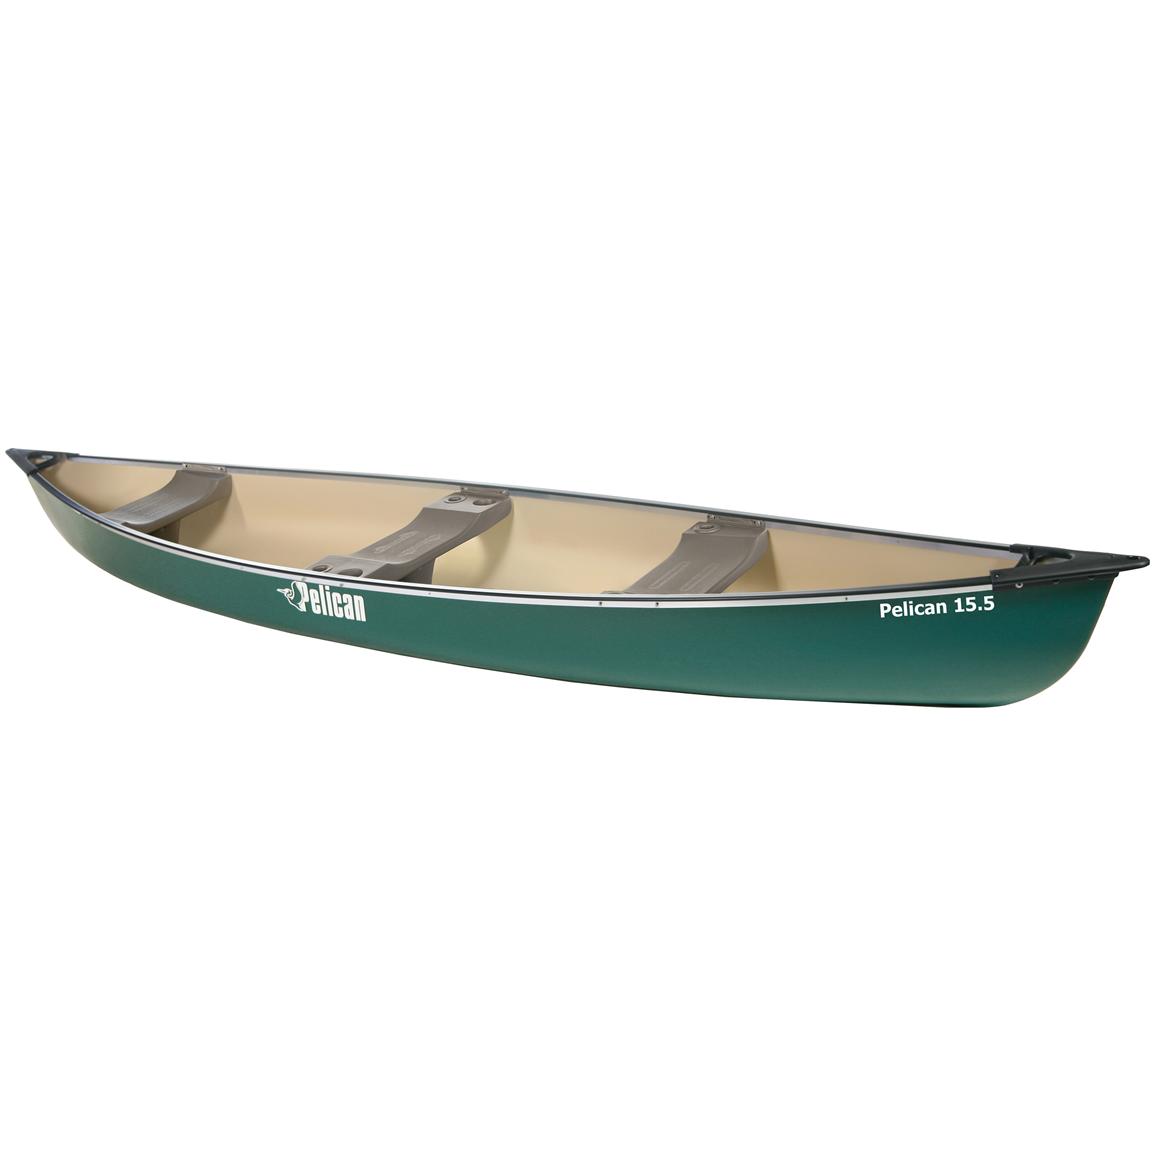 Pelican™ 15.5 Canoe - 183748, Canoes & Kayaks at Sportsman's Guide